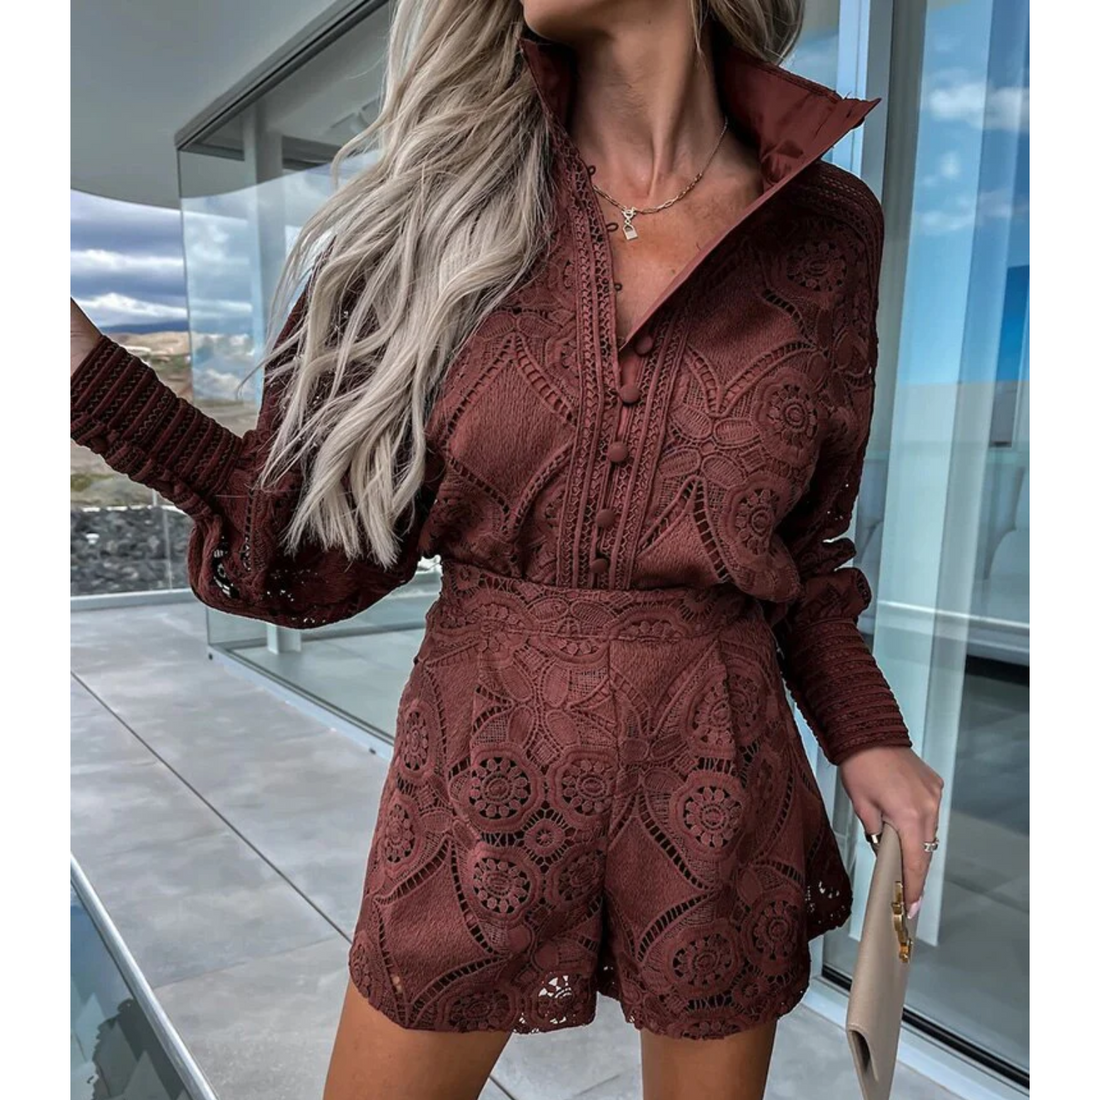 Jillian - Elegant Lace Outfit